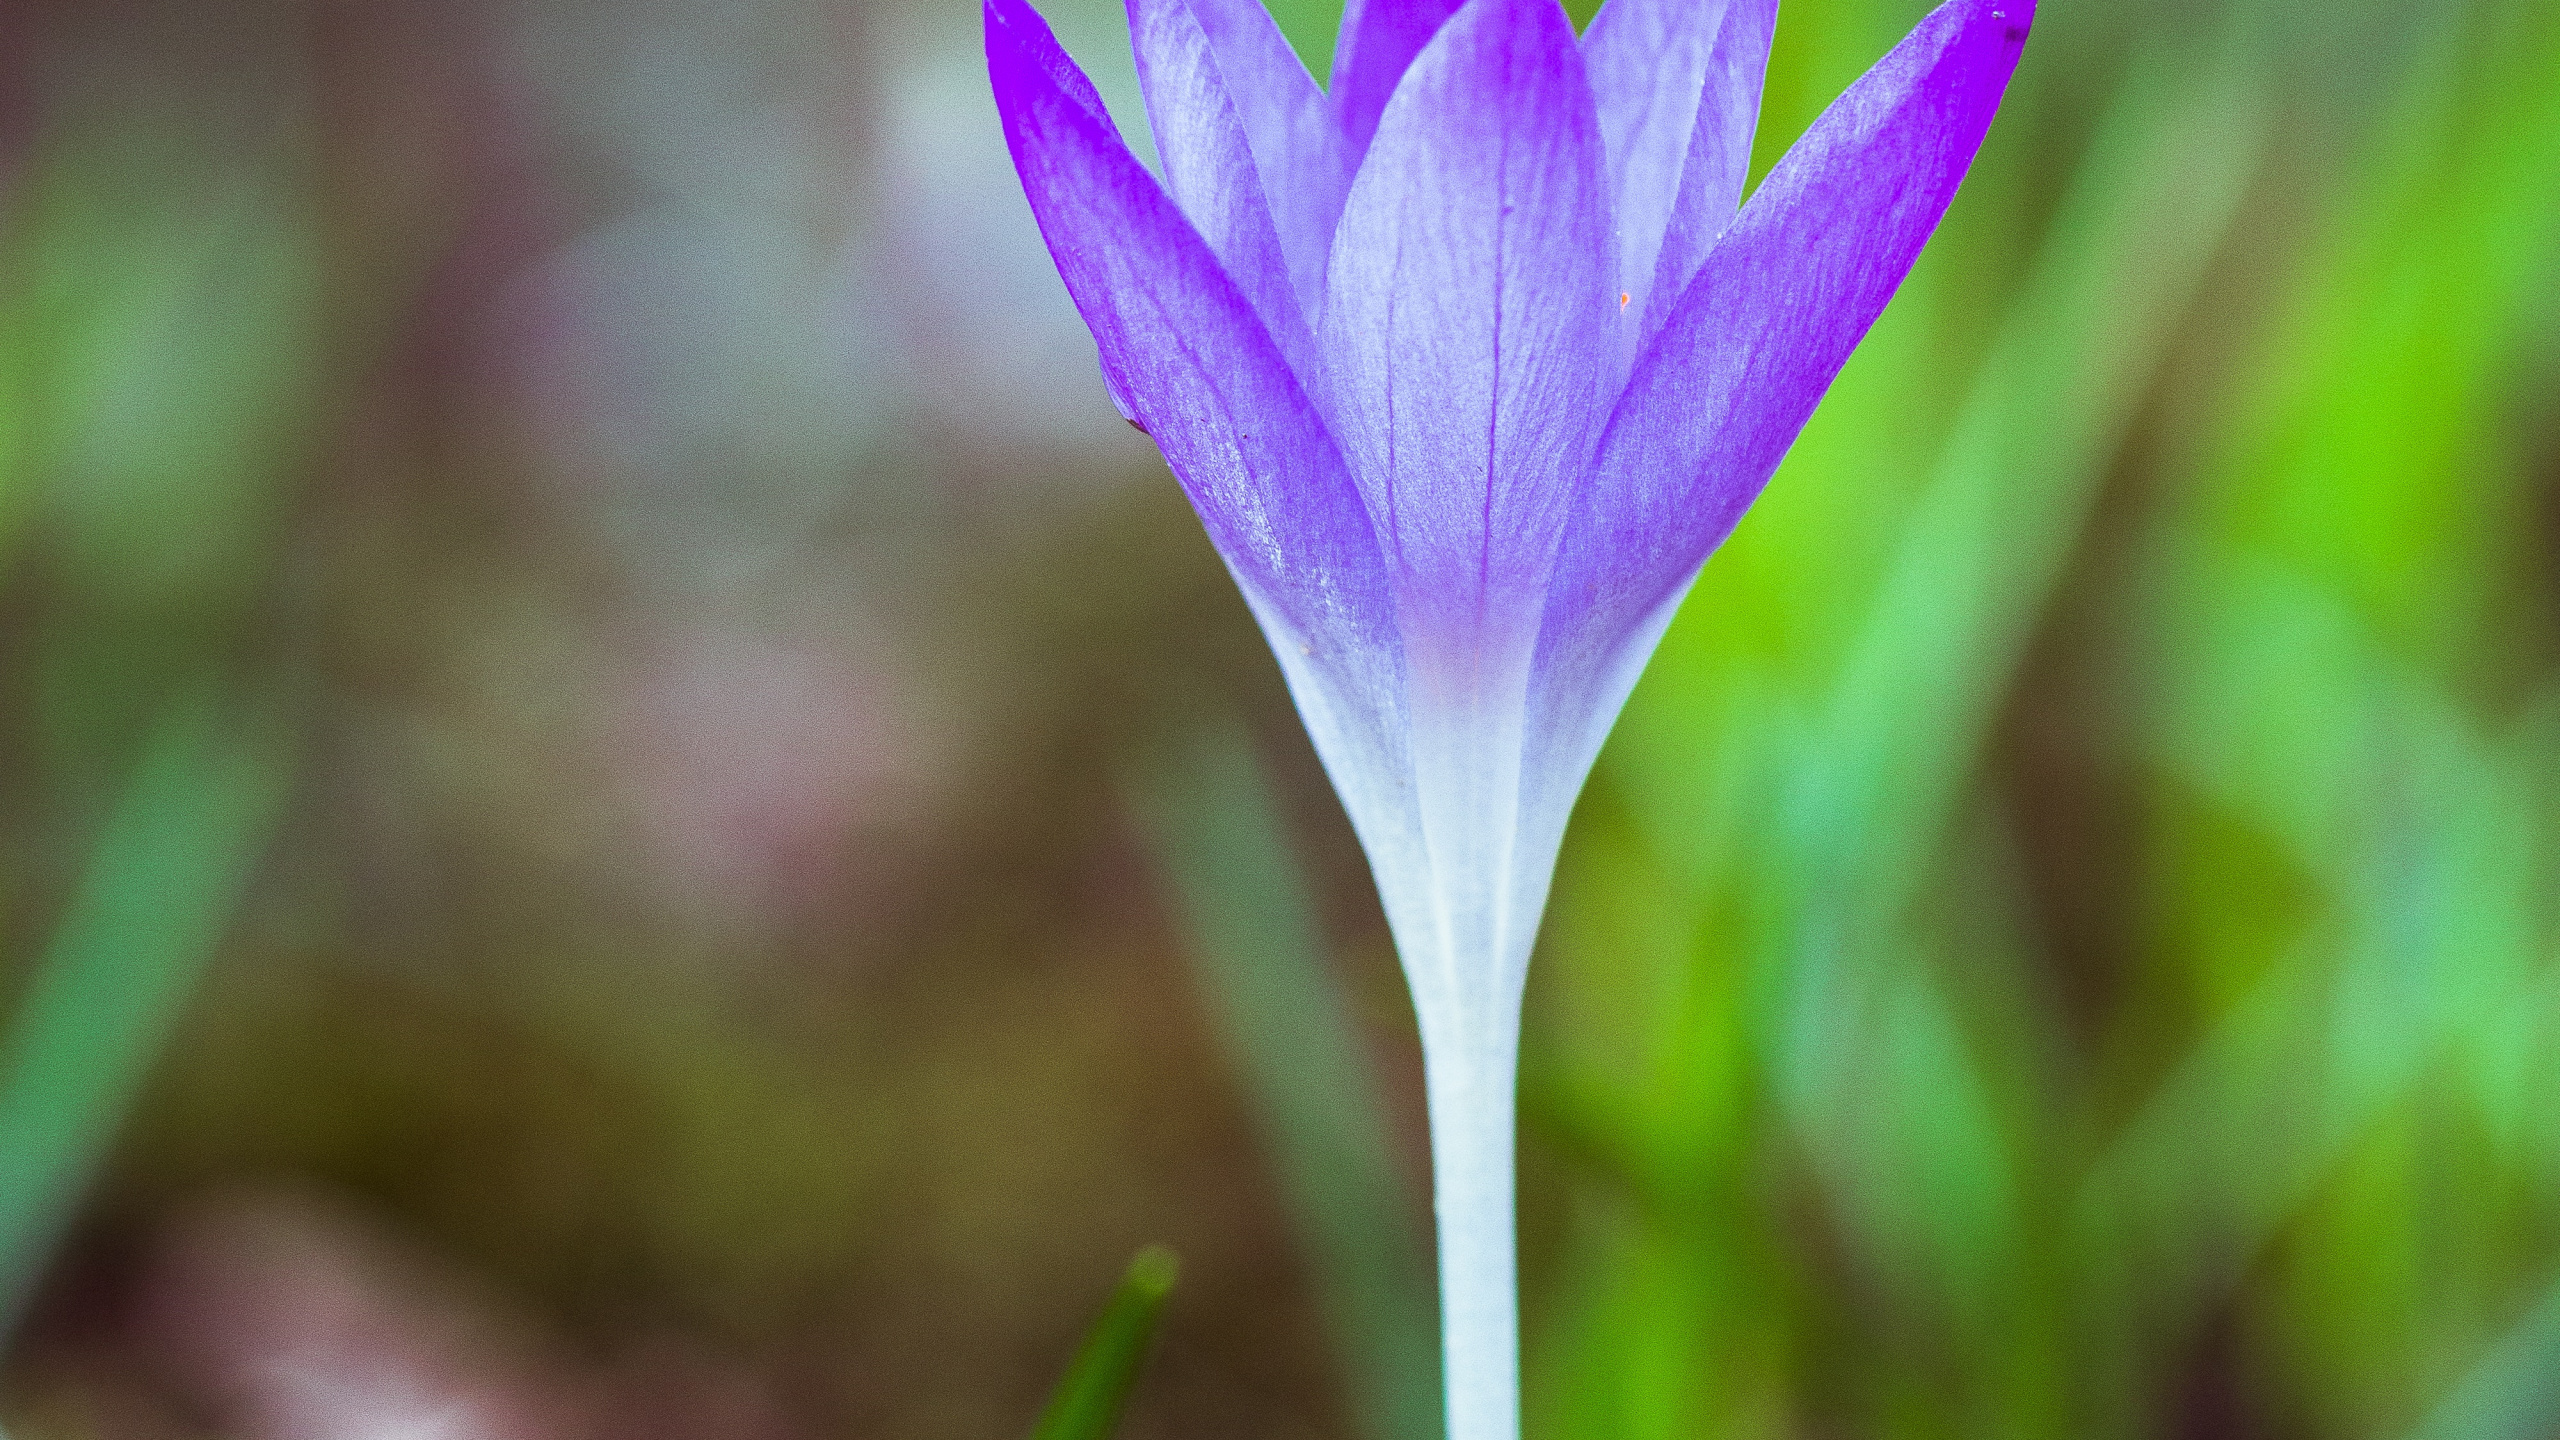 Purple Crocus Flower in Bloom During Daytime. Wallpaper in 2560x1440 Resolution